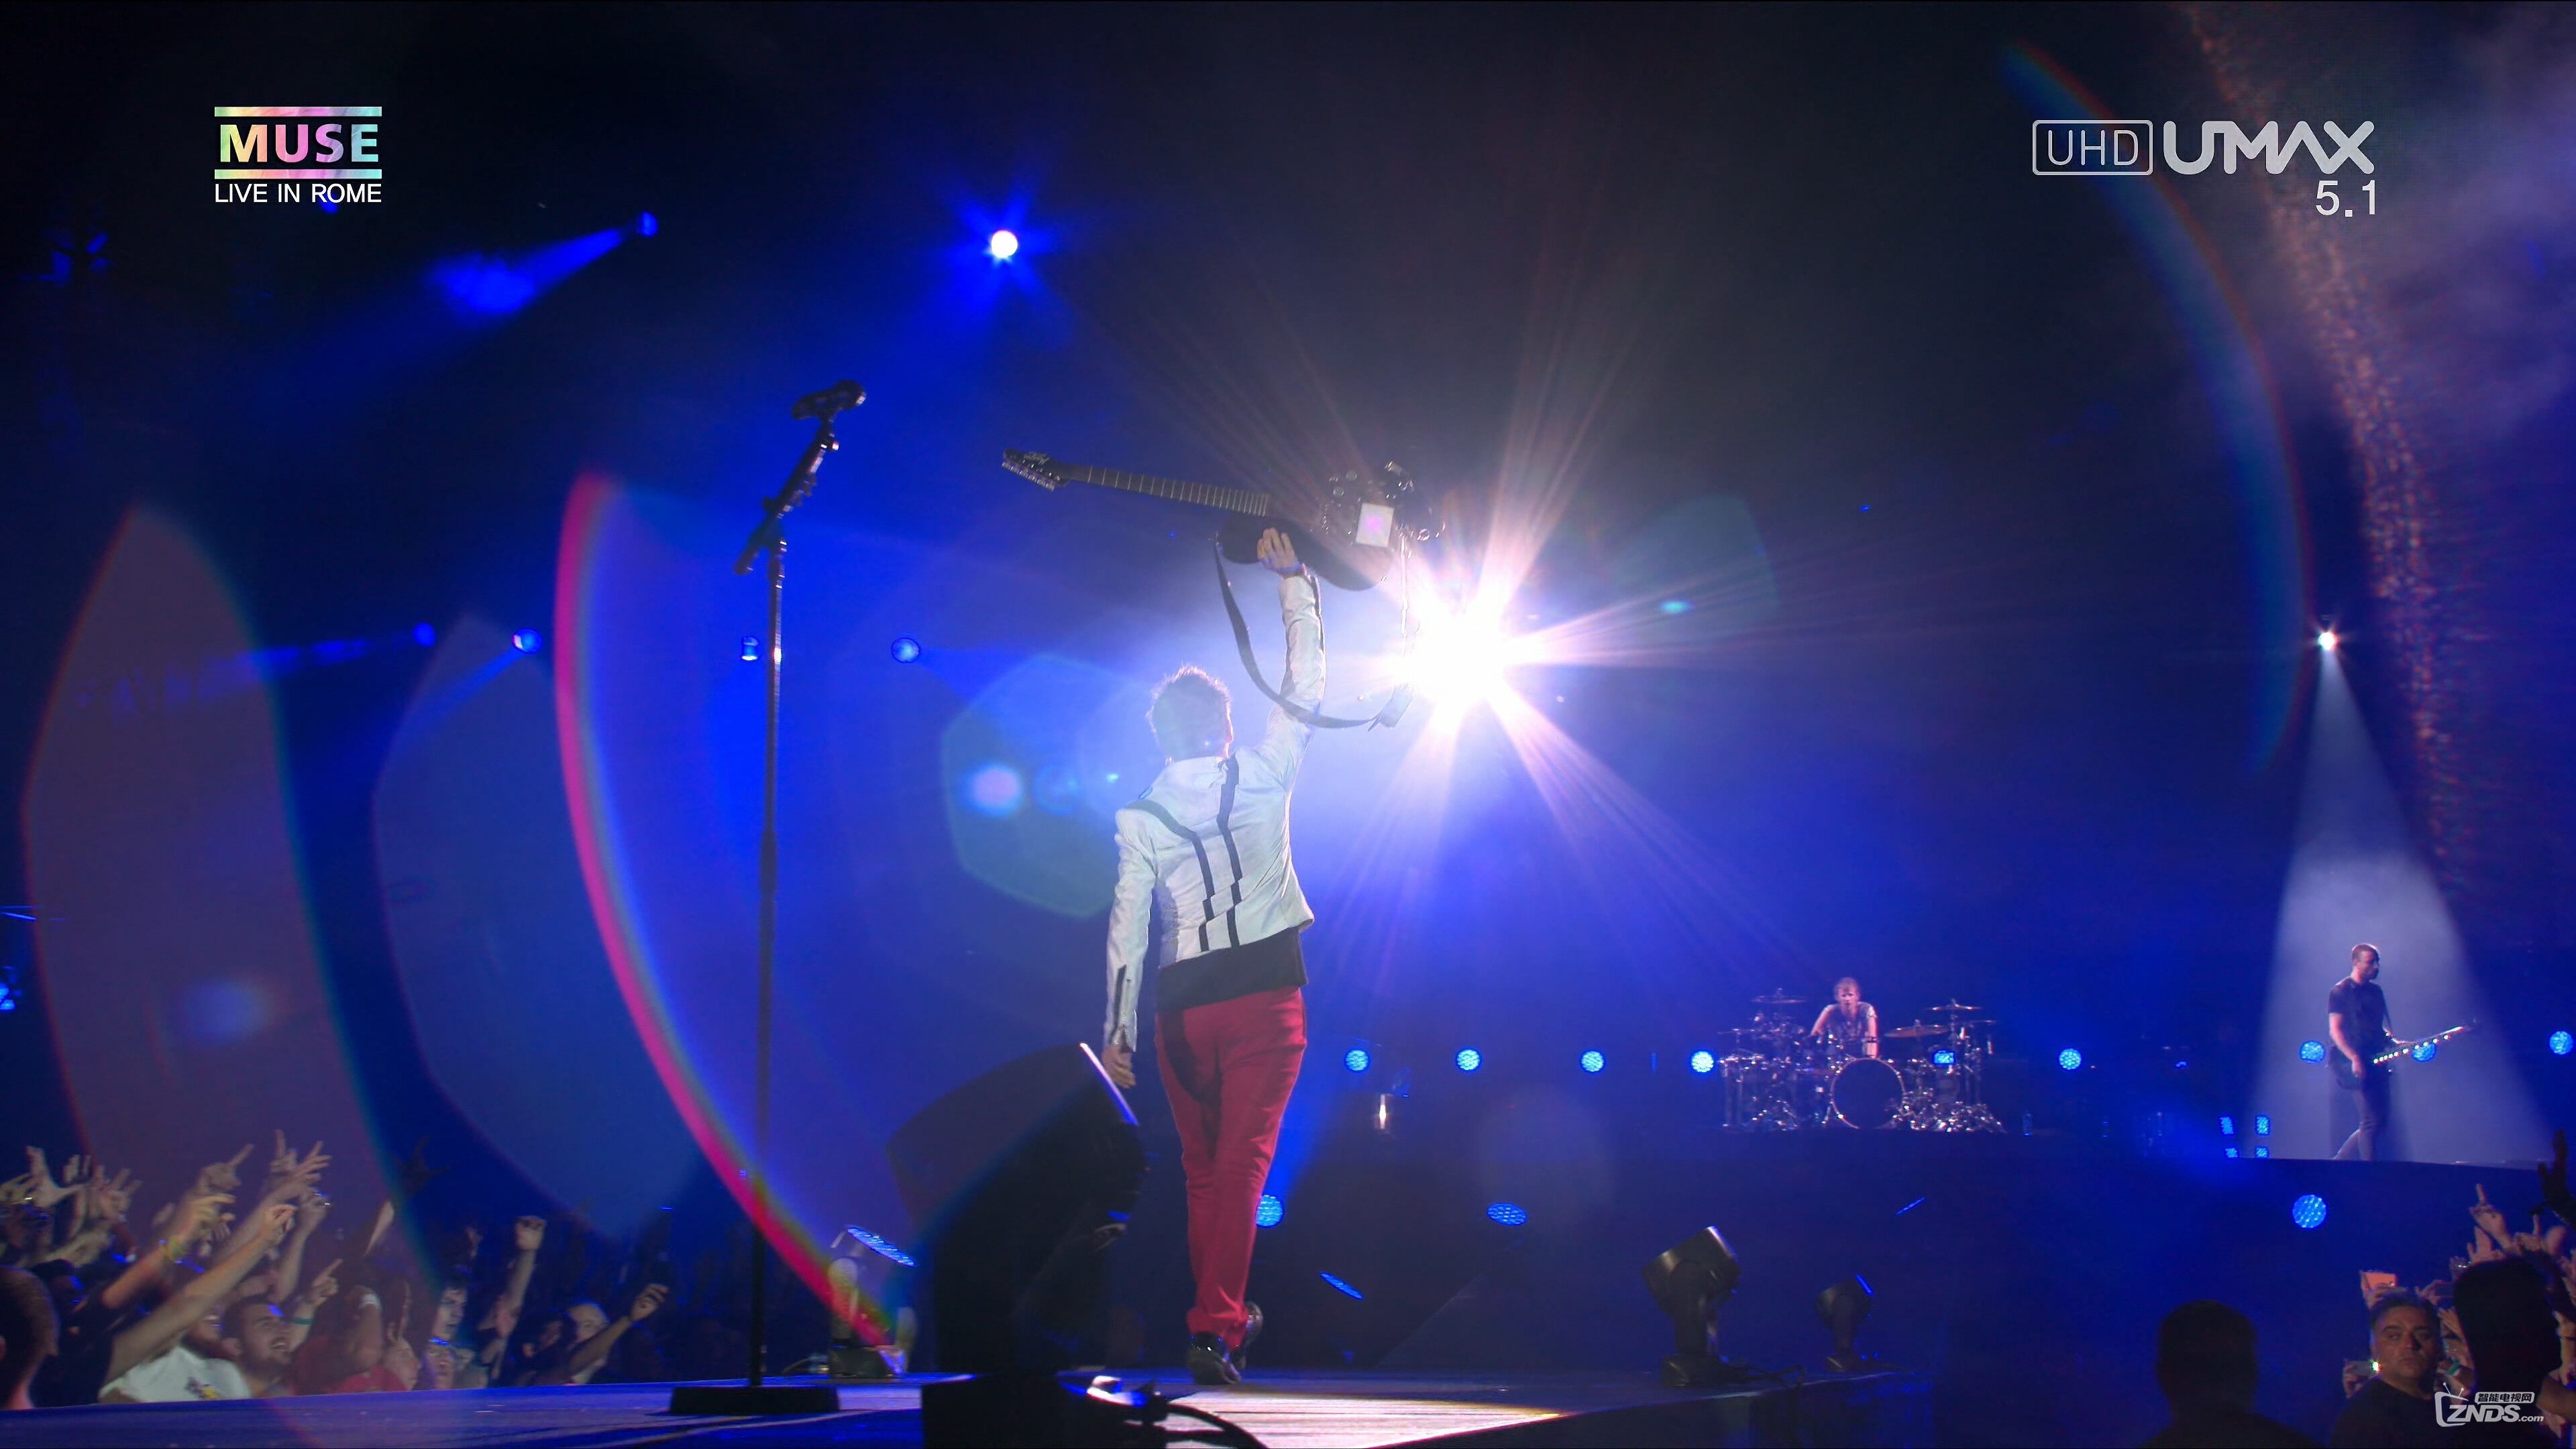 Muse.Live.At.Rome.Olympic.Stadium.2013.2160p.UHDTV.HEVC.mkv_20160312_231710.296.jpg